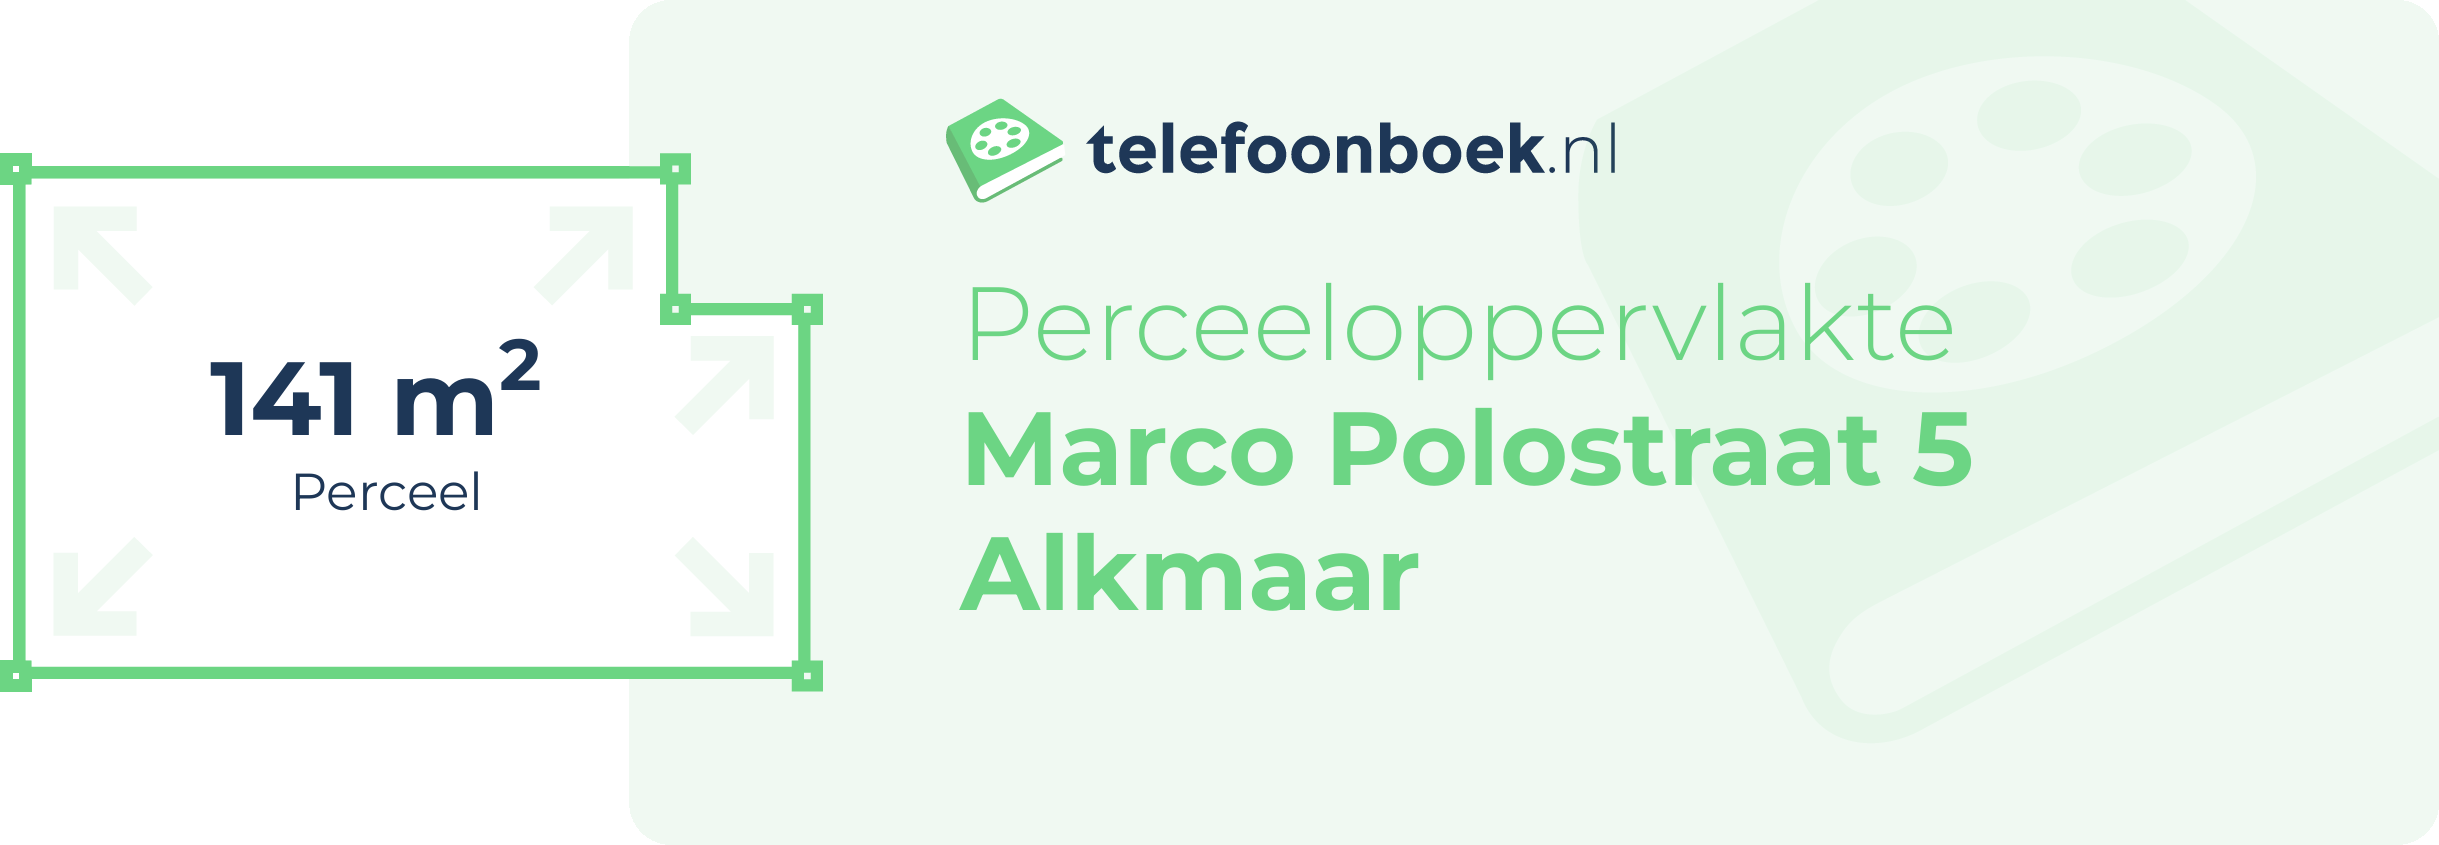 Perceeloppervlakte Marco Polostraat 5 Alkmaar